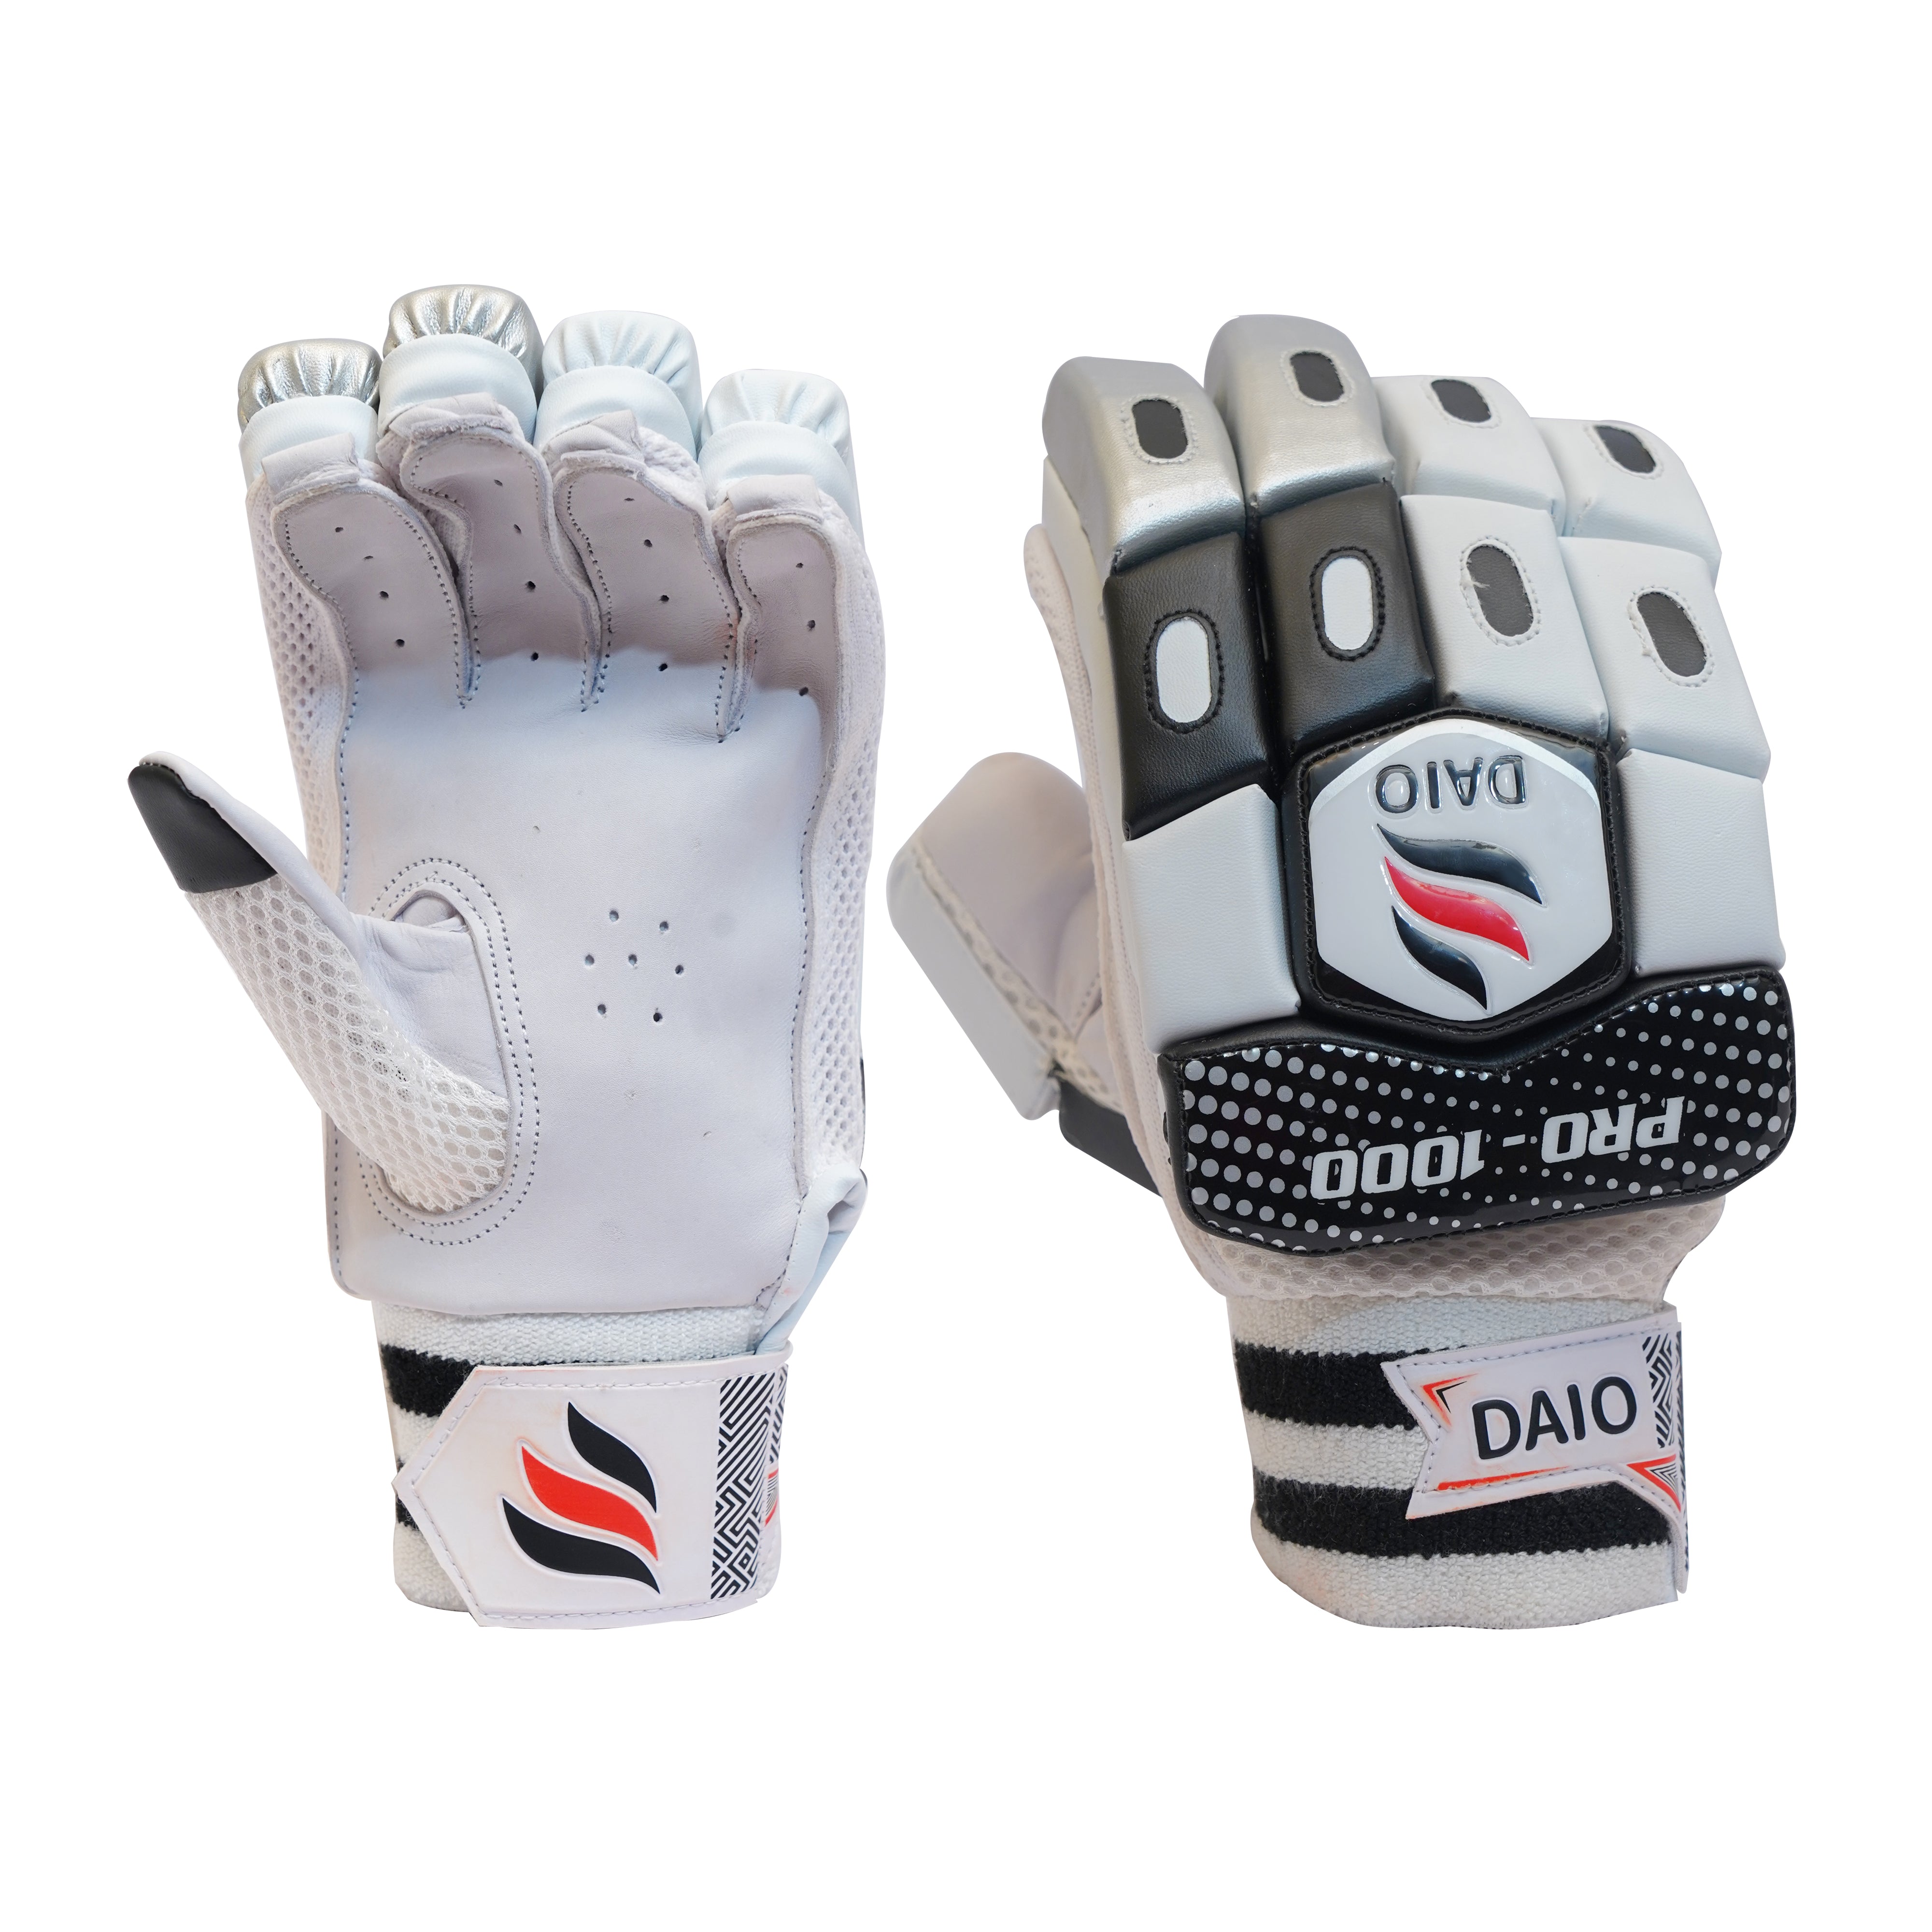 Daio PRO-1000 adult batting glove